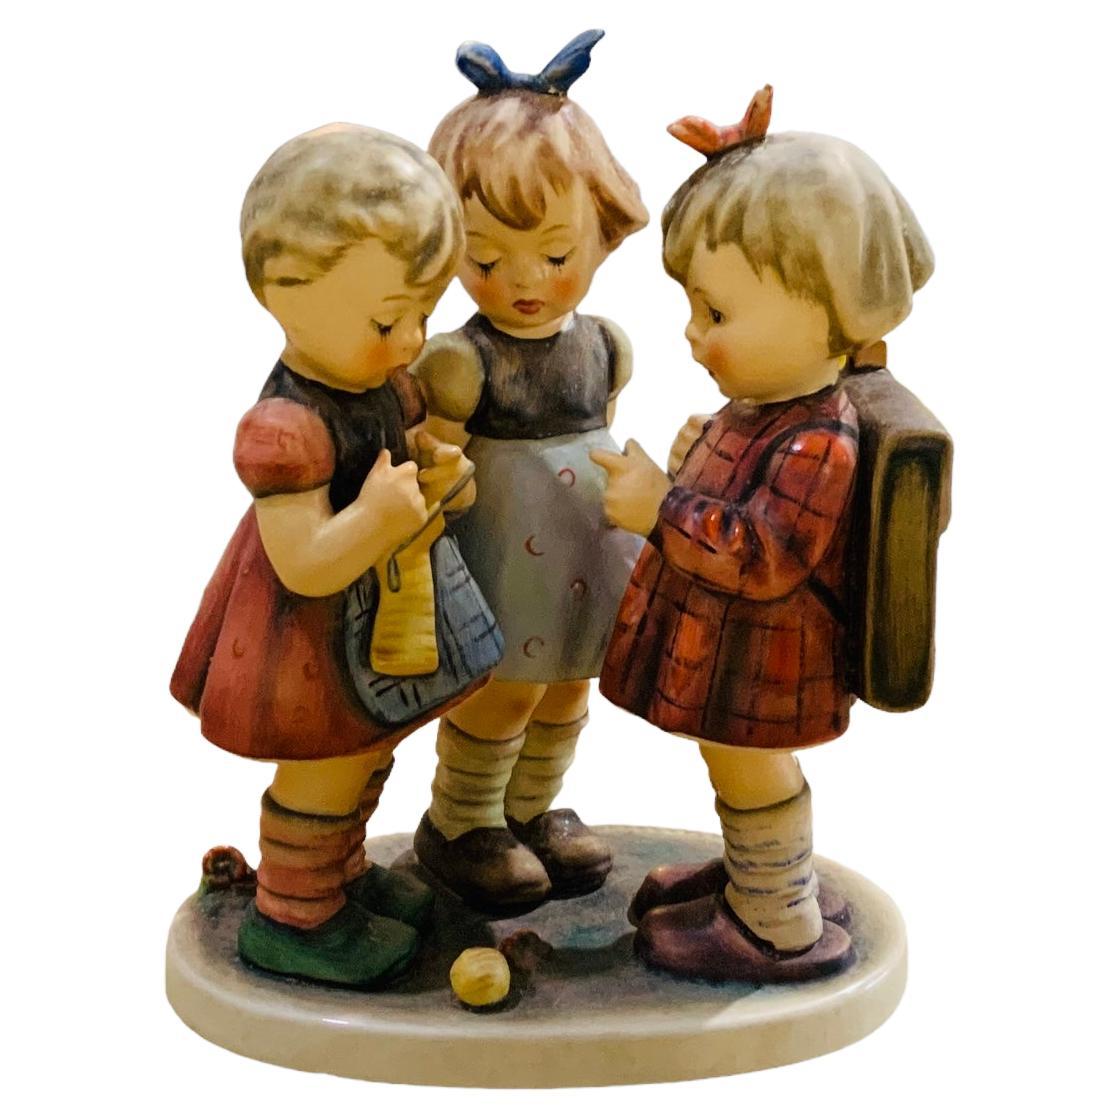 Goebel Company Hummel Porcelain Group Figurines “School Girls” For Sale